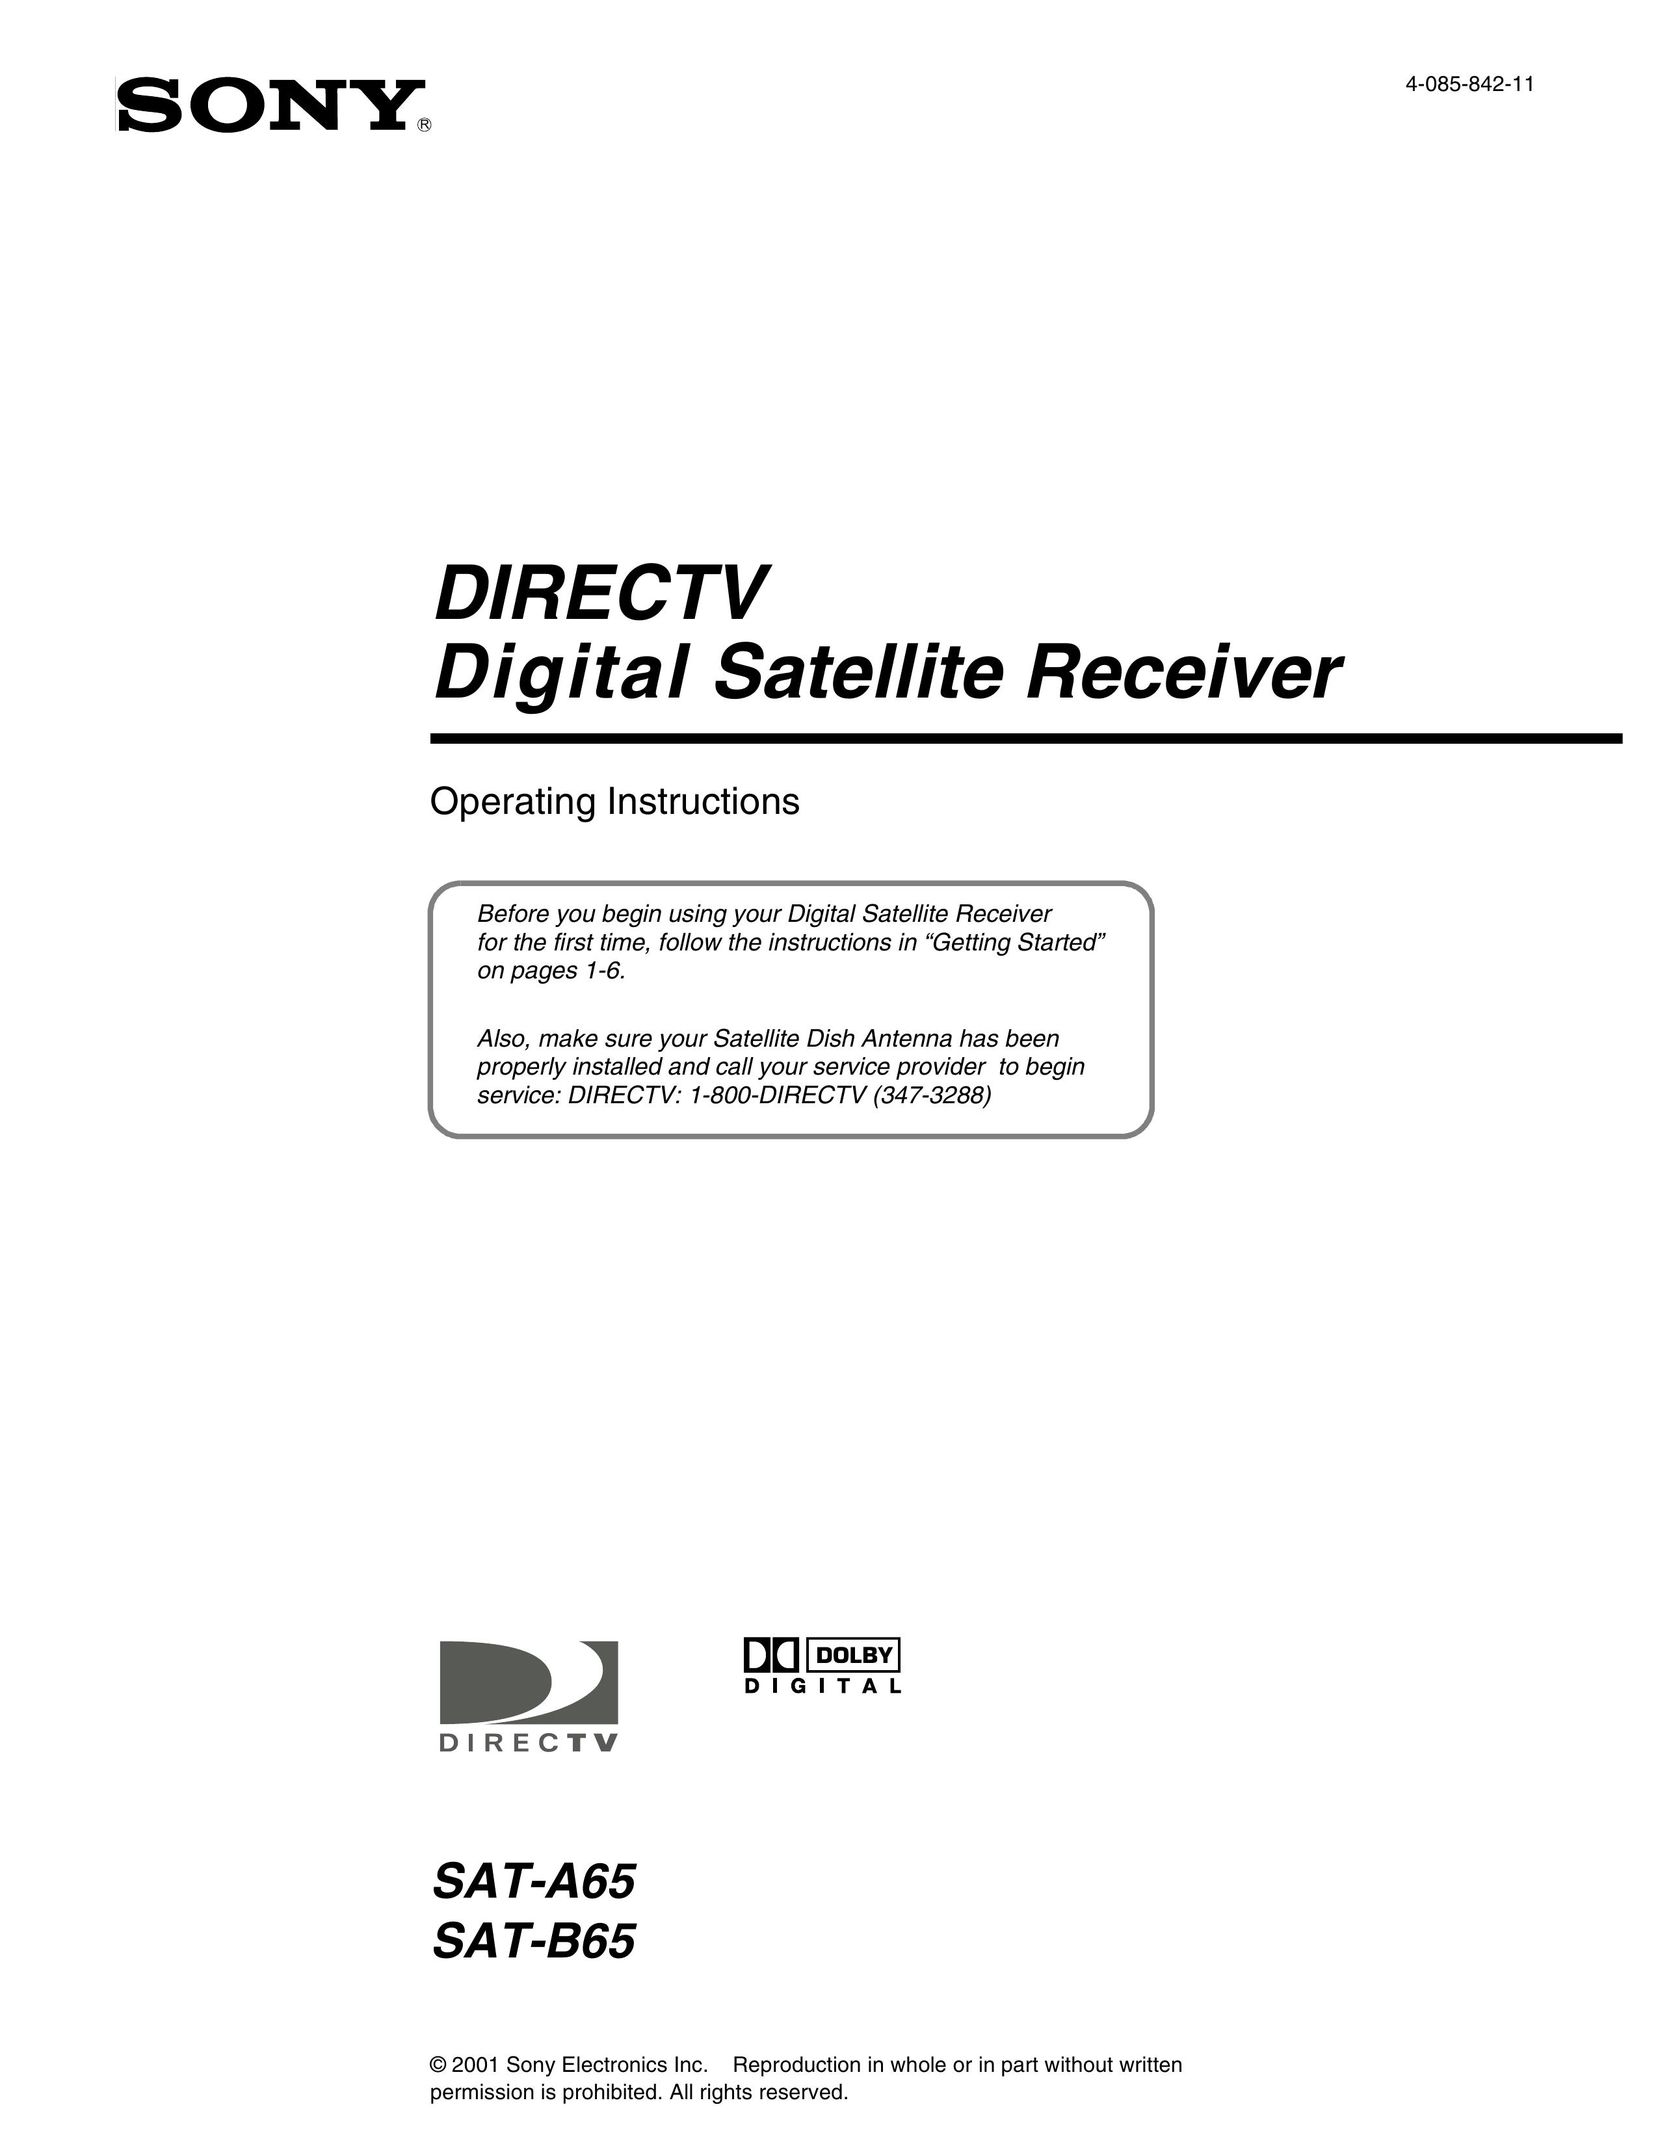 Sony SAT-A65 Satellite TV System User Manual